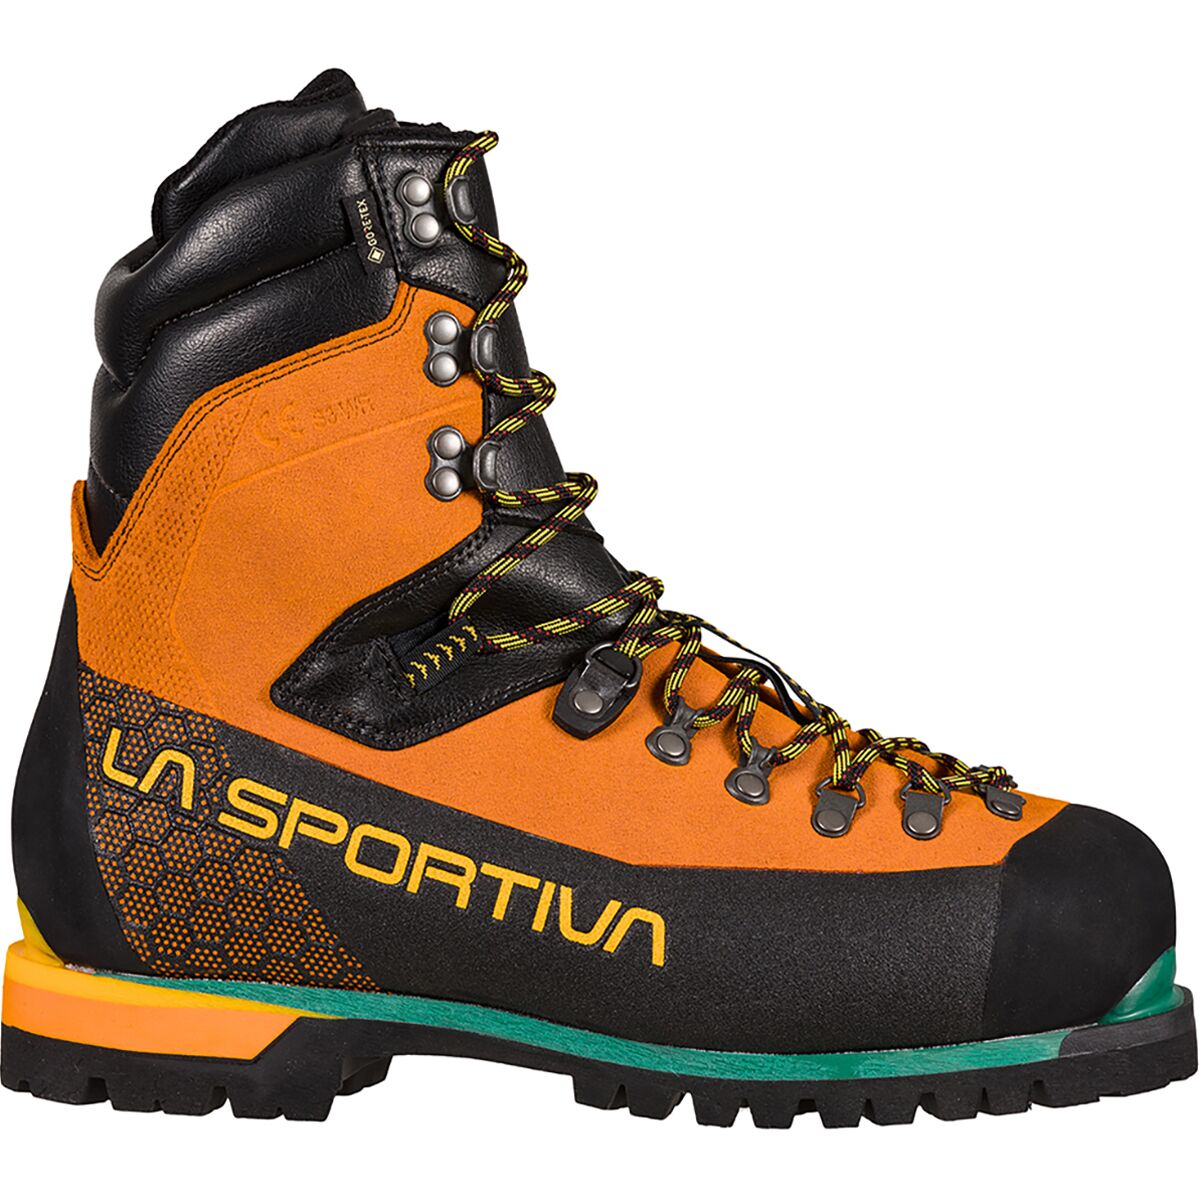 La Sportiva Nepal S3 Work GTX Boot - Men's